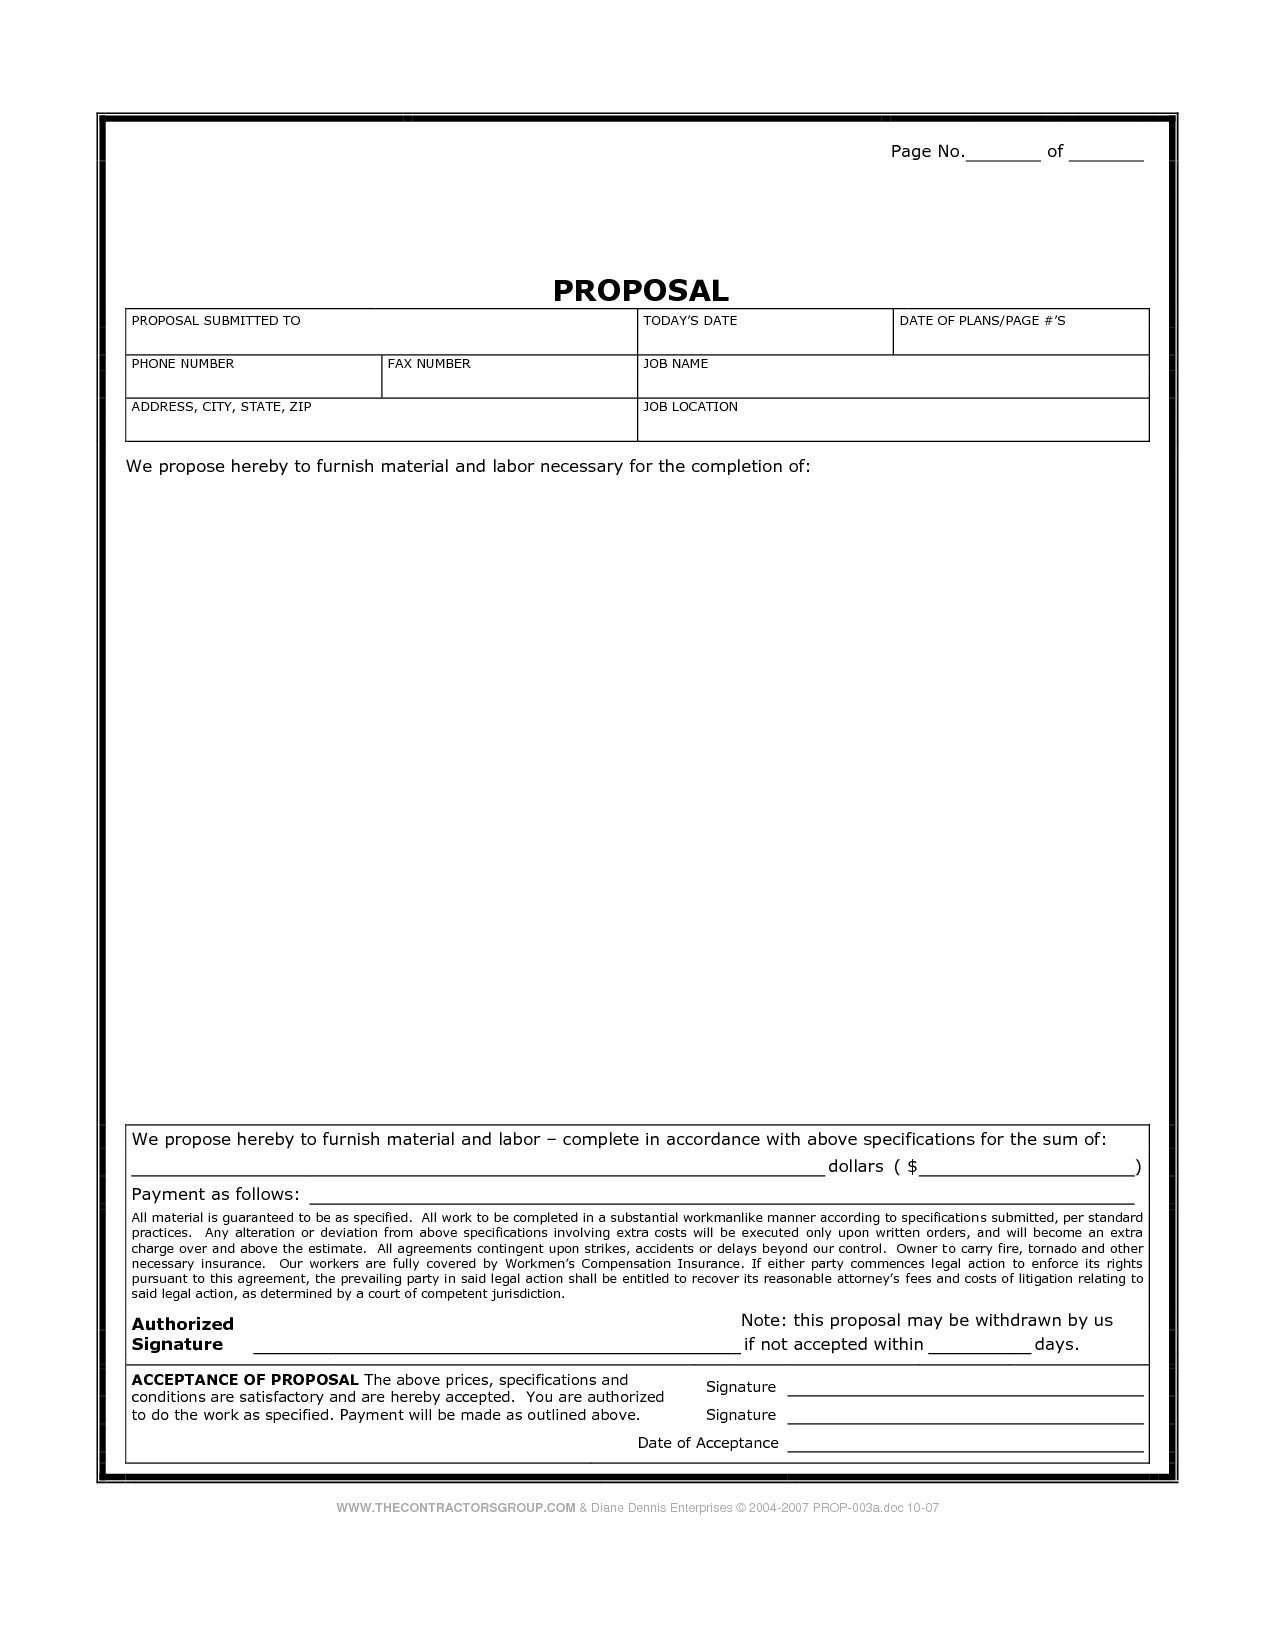 Contractor Bid Sheet Template Printable Blank Bid Proposal forms